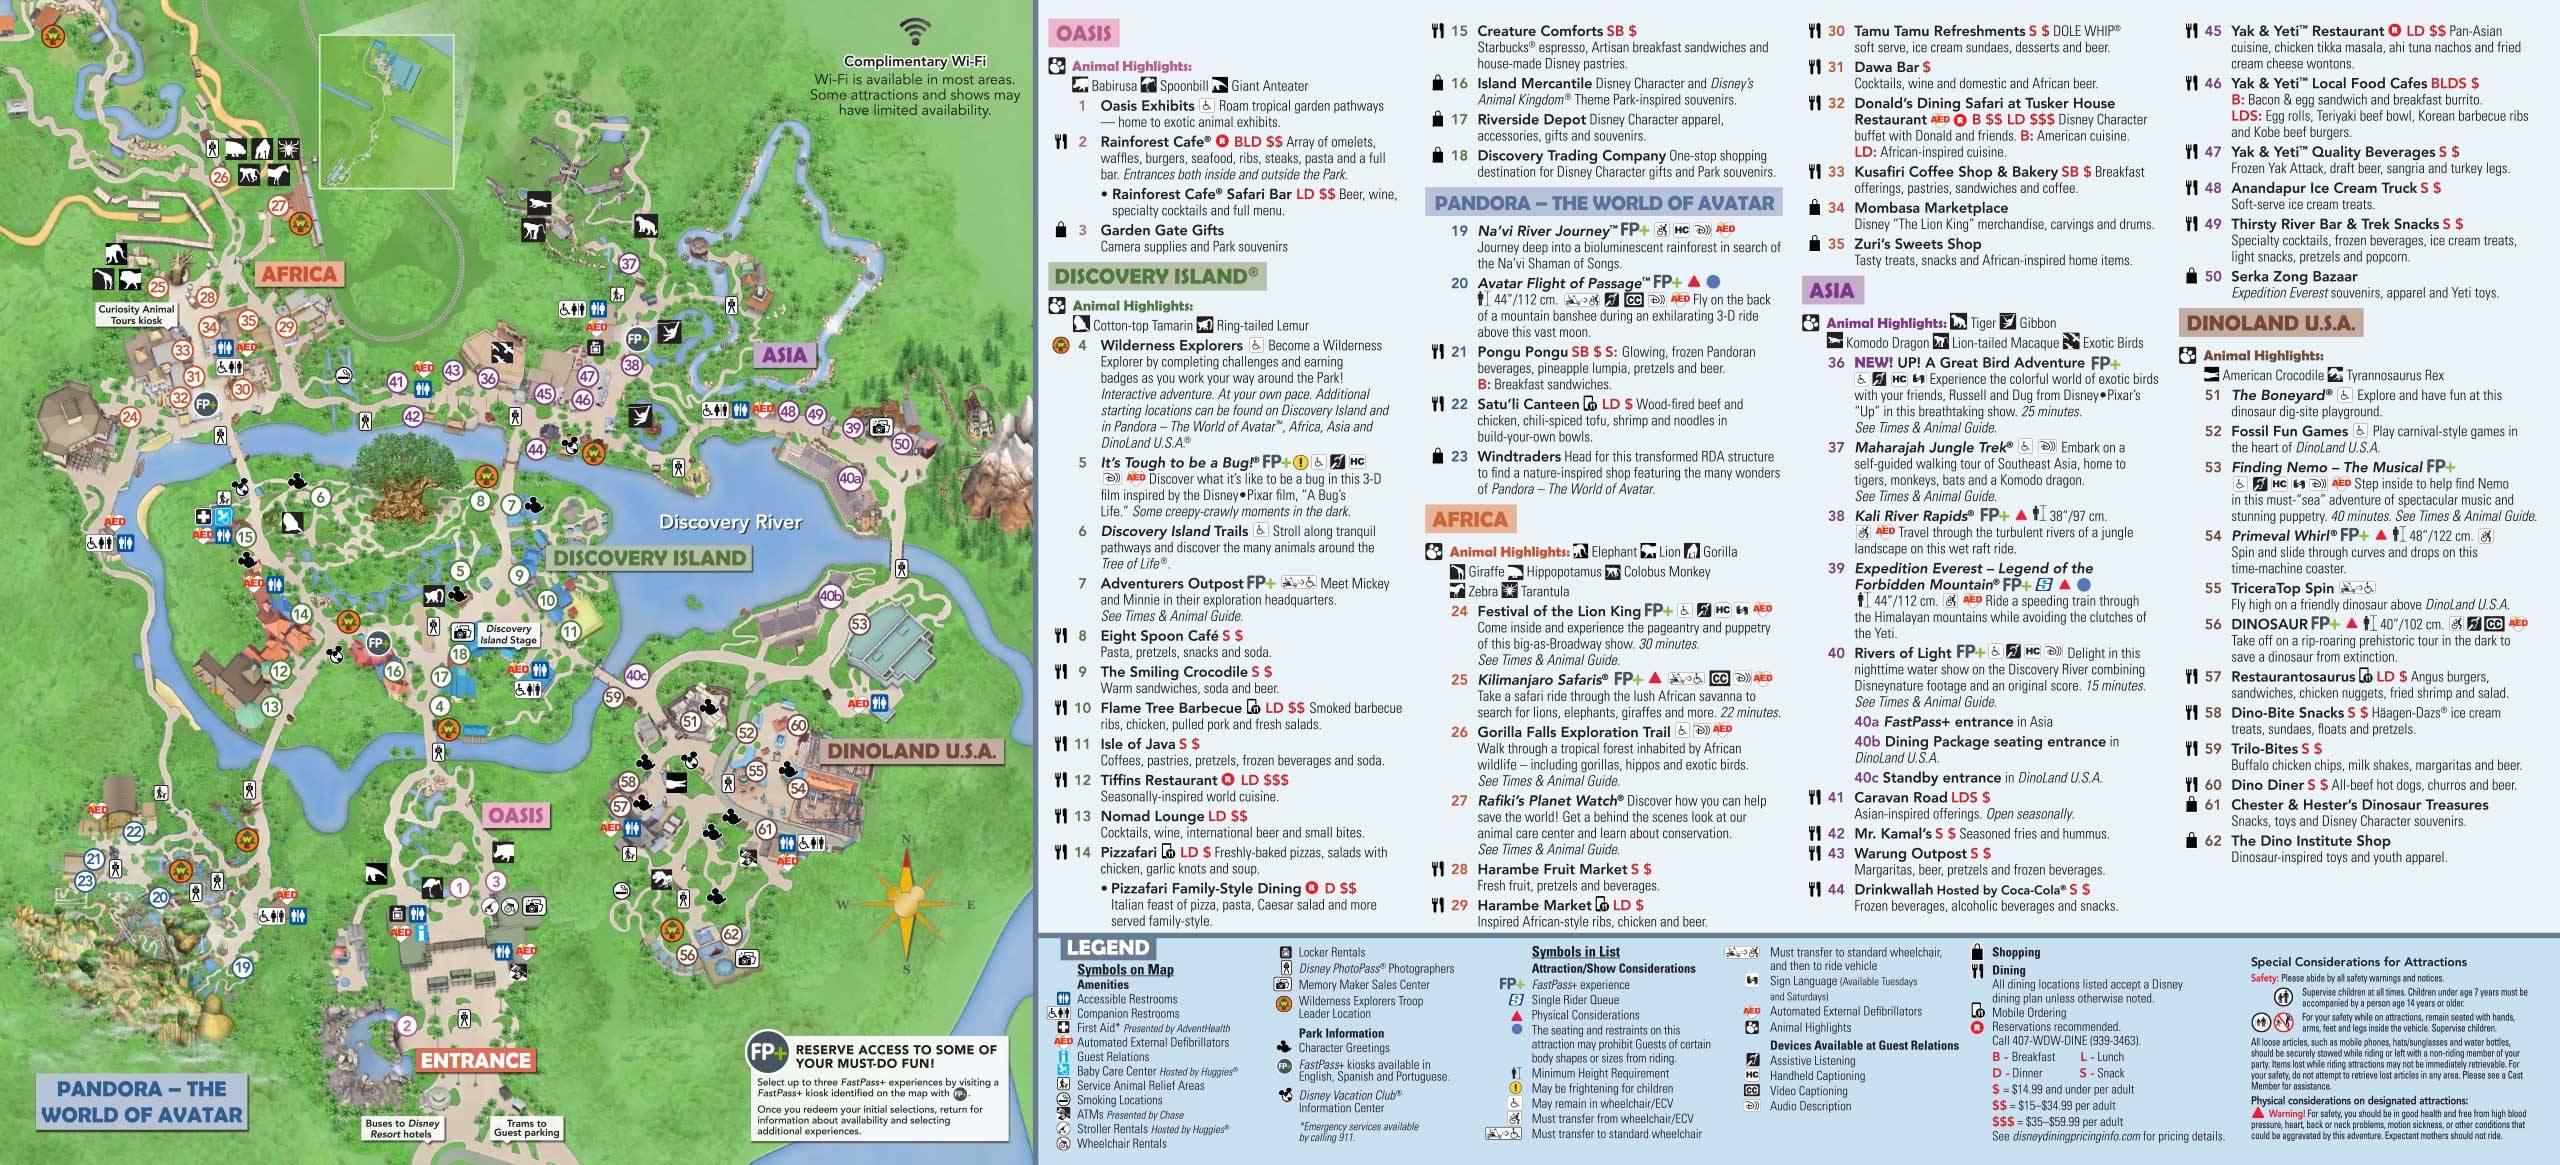 January 2019 Walt Disney World Park Maps